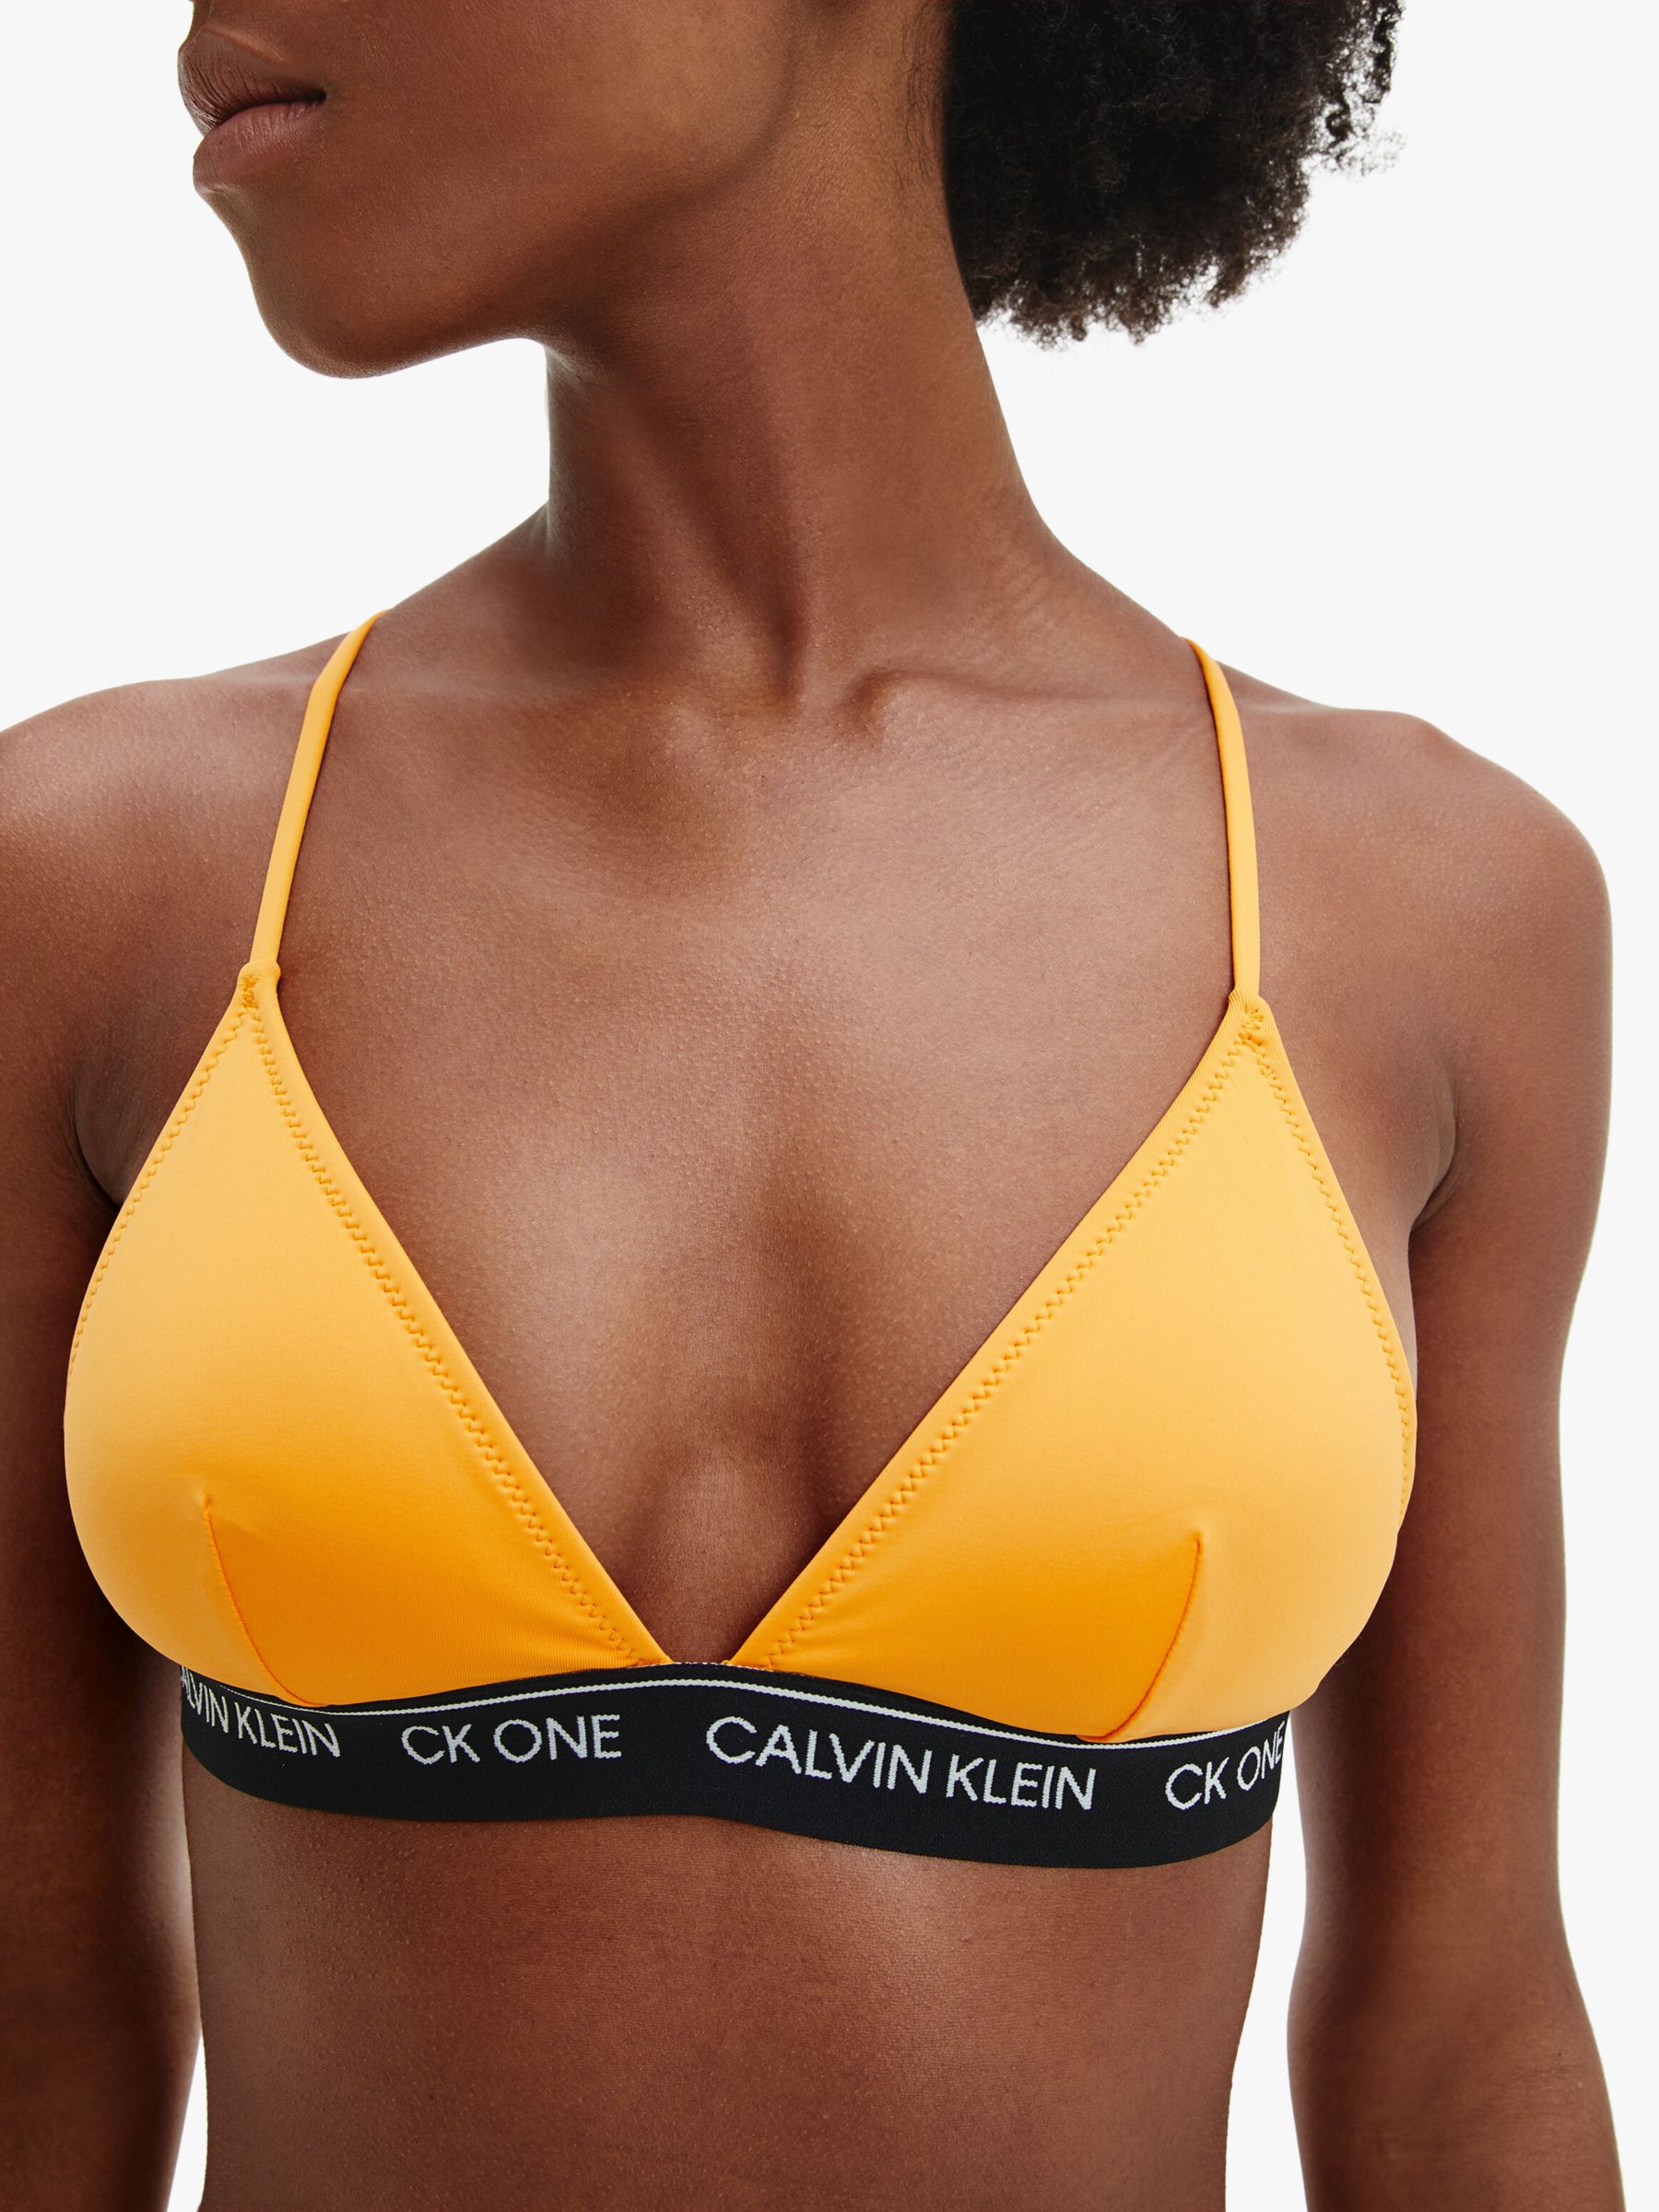 Calvin Klein CK One Top, Sunrise Orange